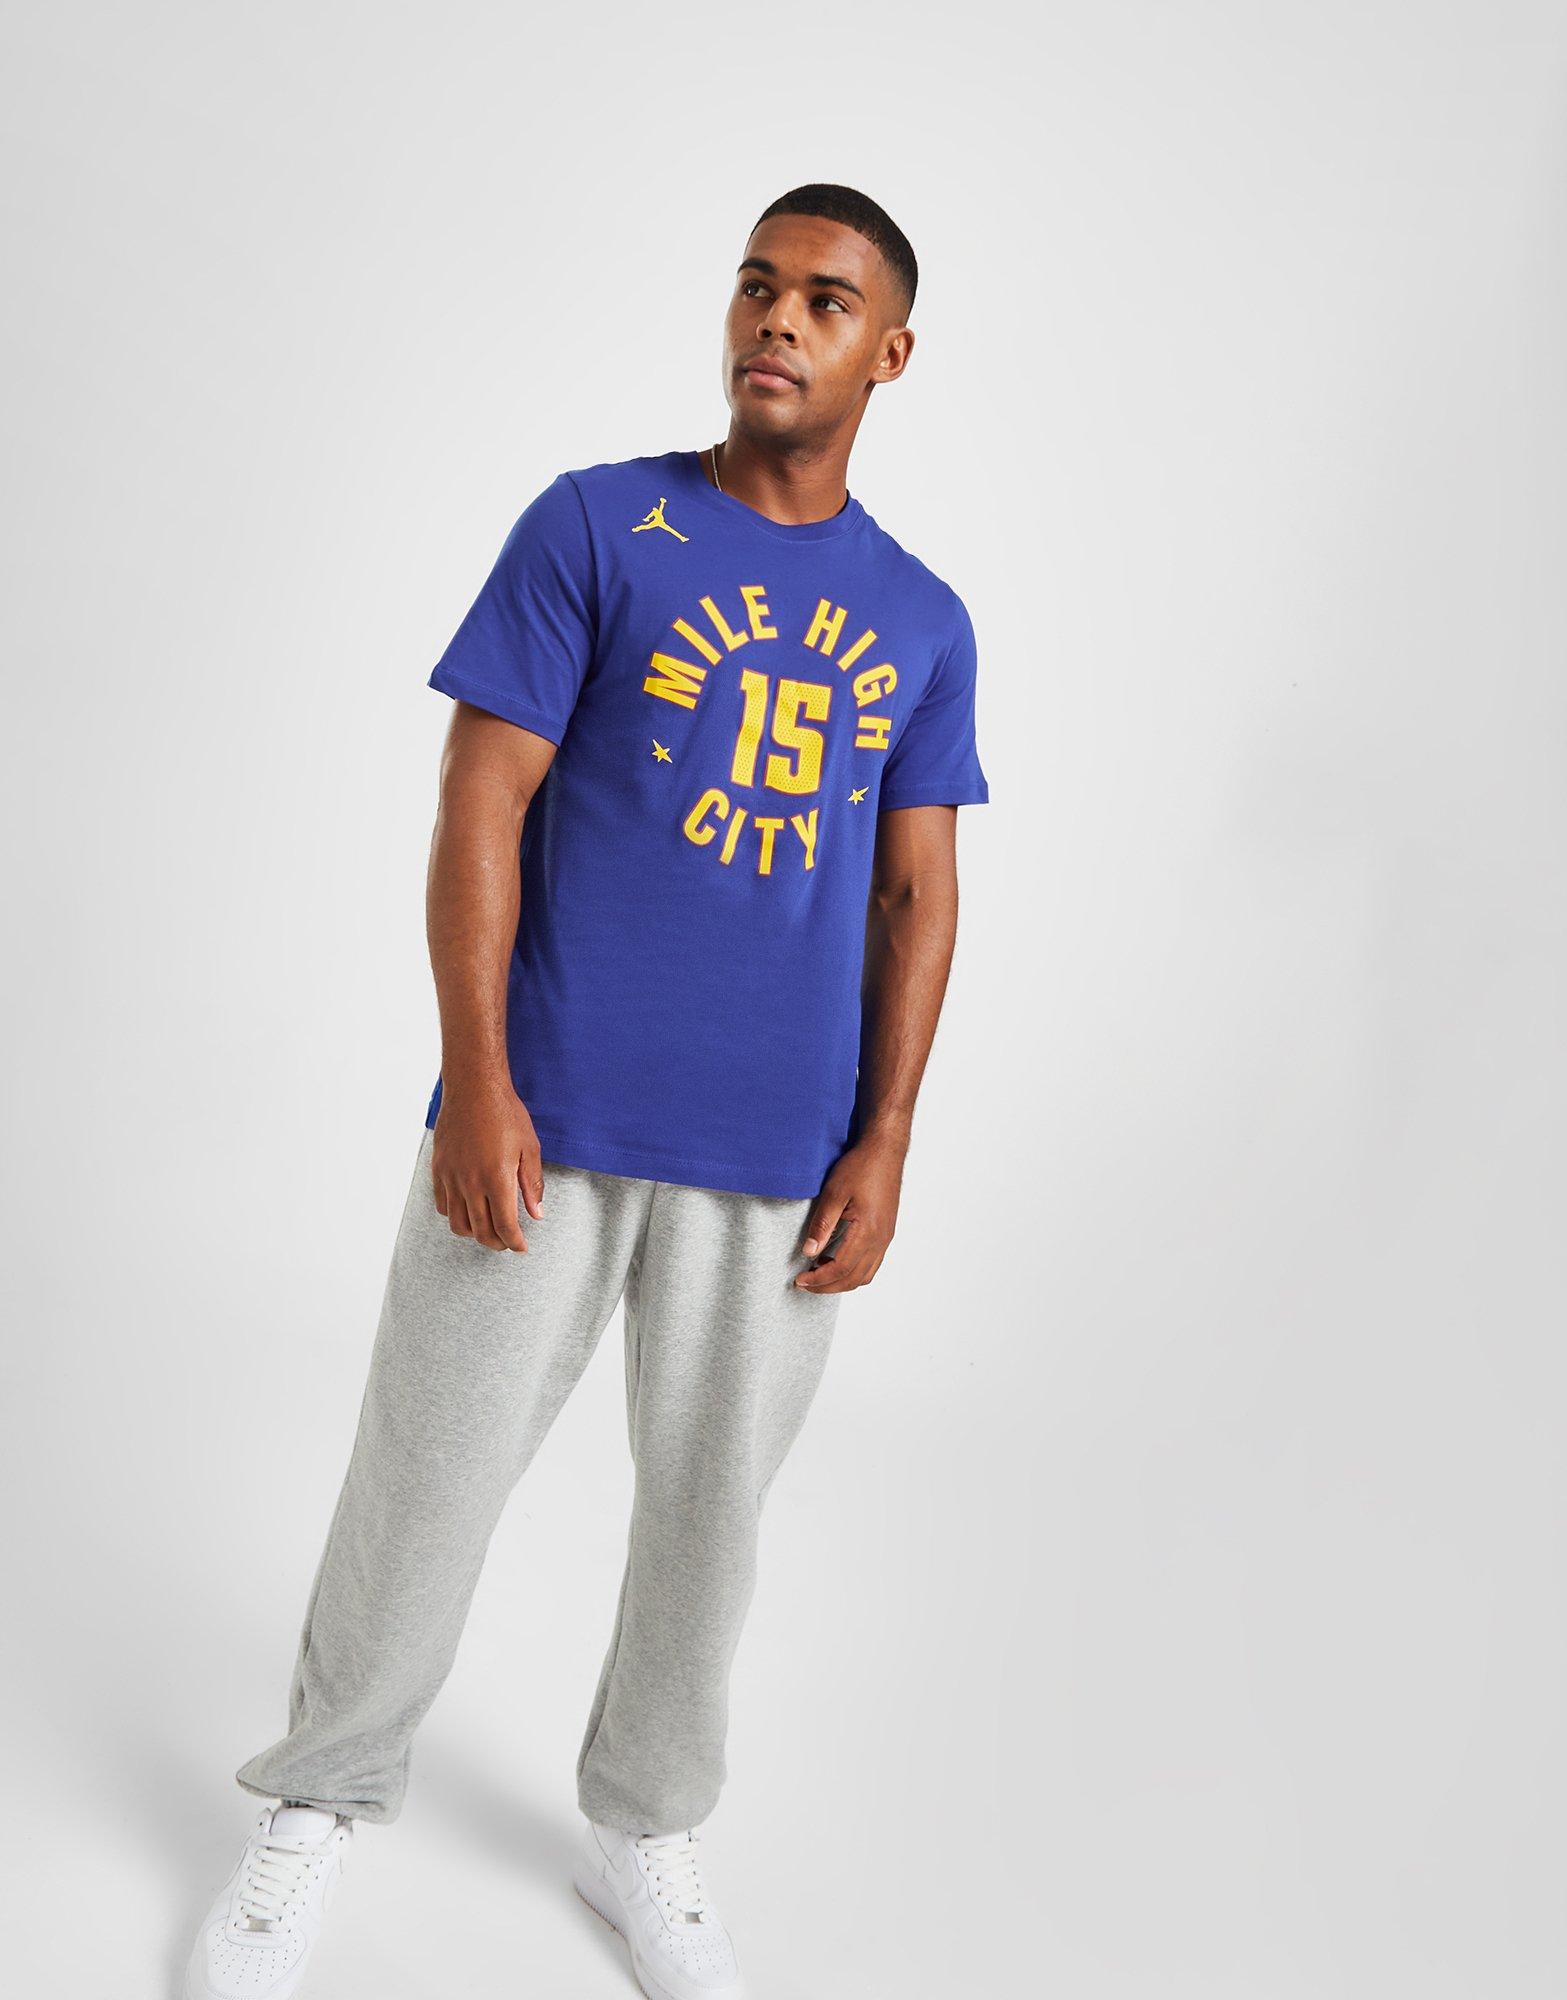 Blue Jordan NBA Denver Nuggets Jokic #15 Statement T-Shirt